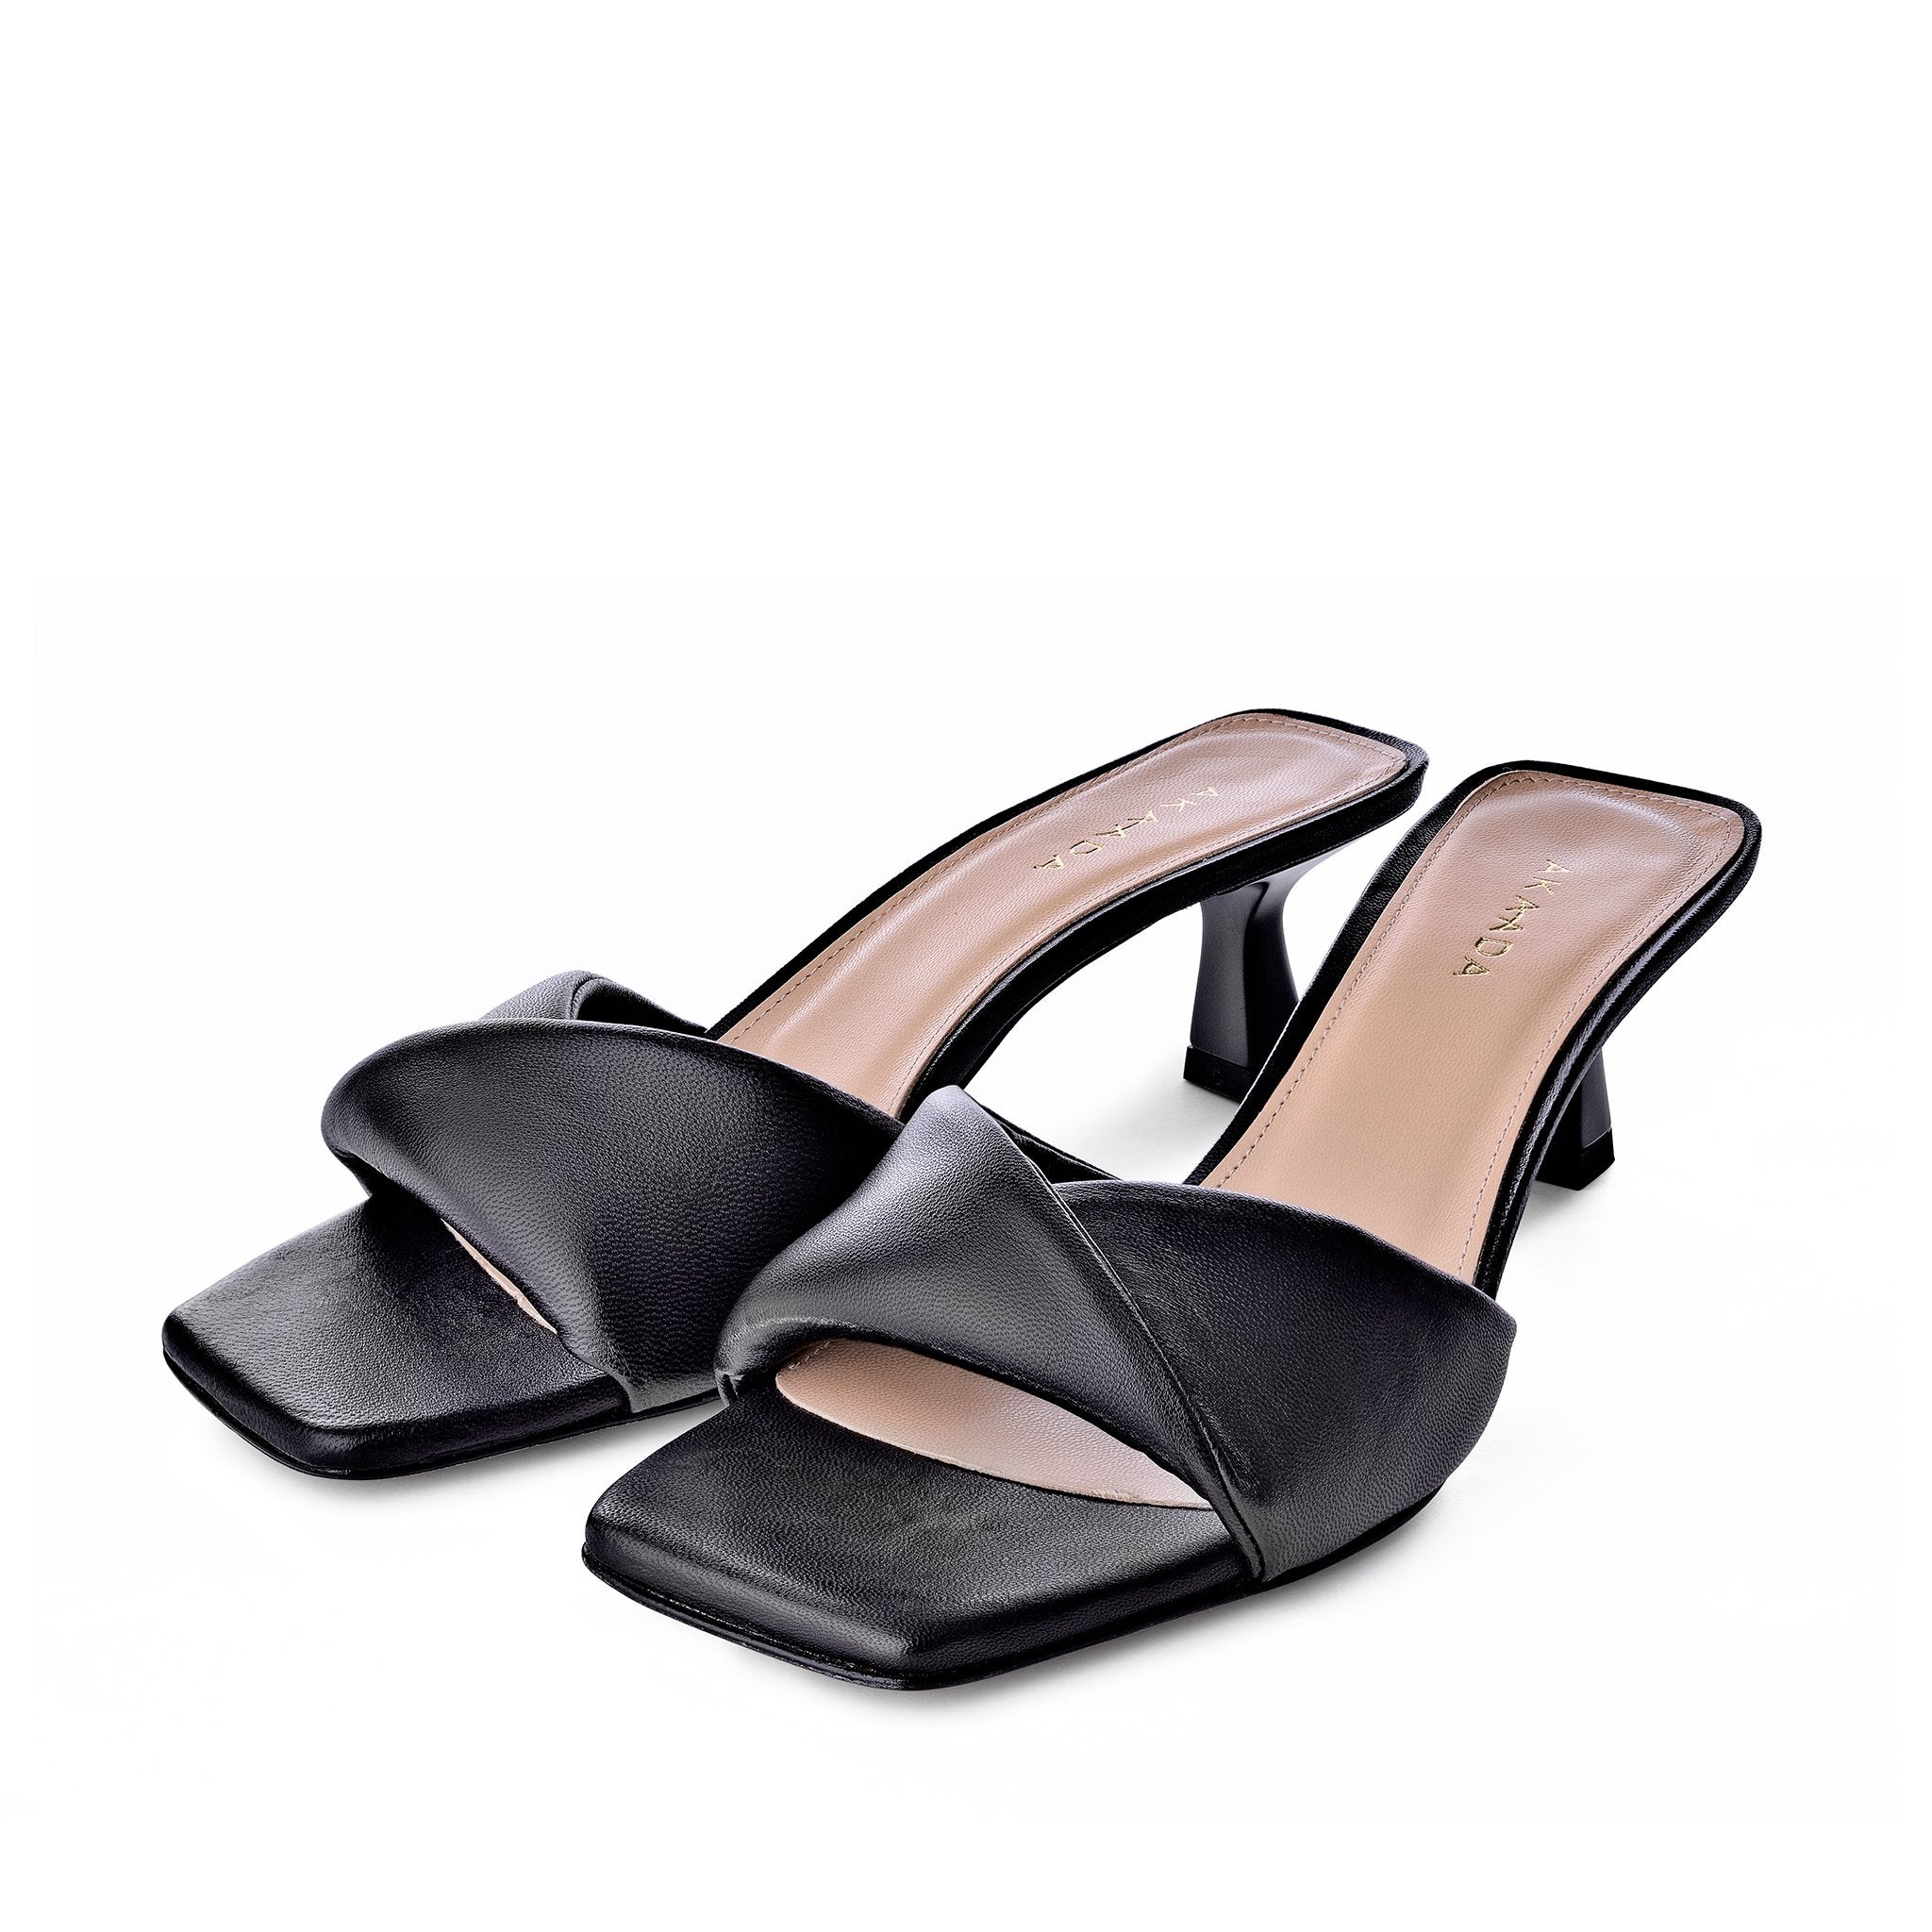 Haya Black Soft Leather Sandals 1413-02 - 8